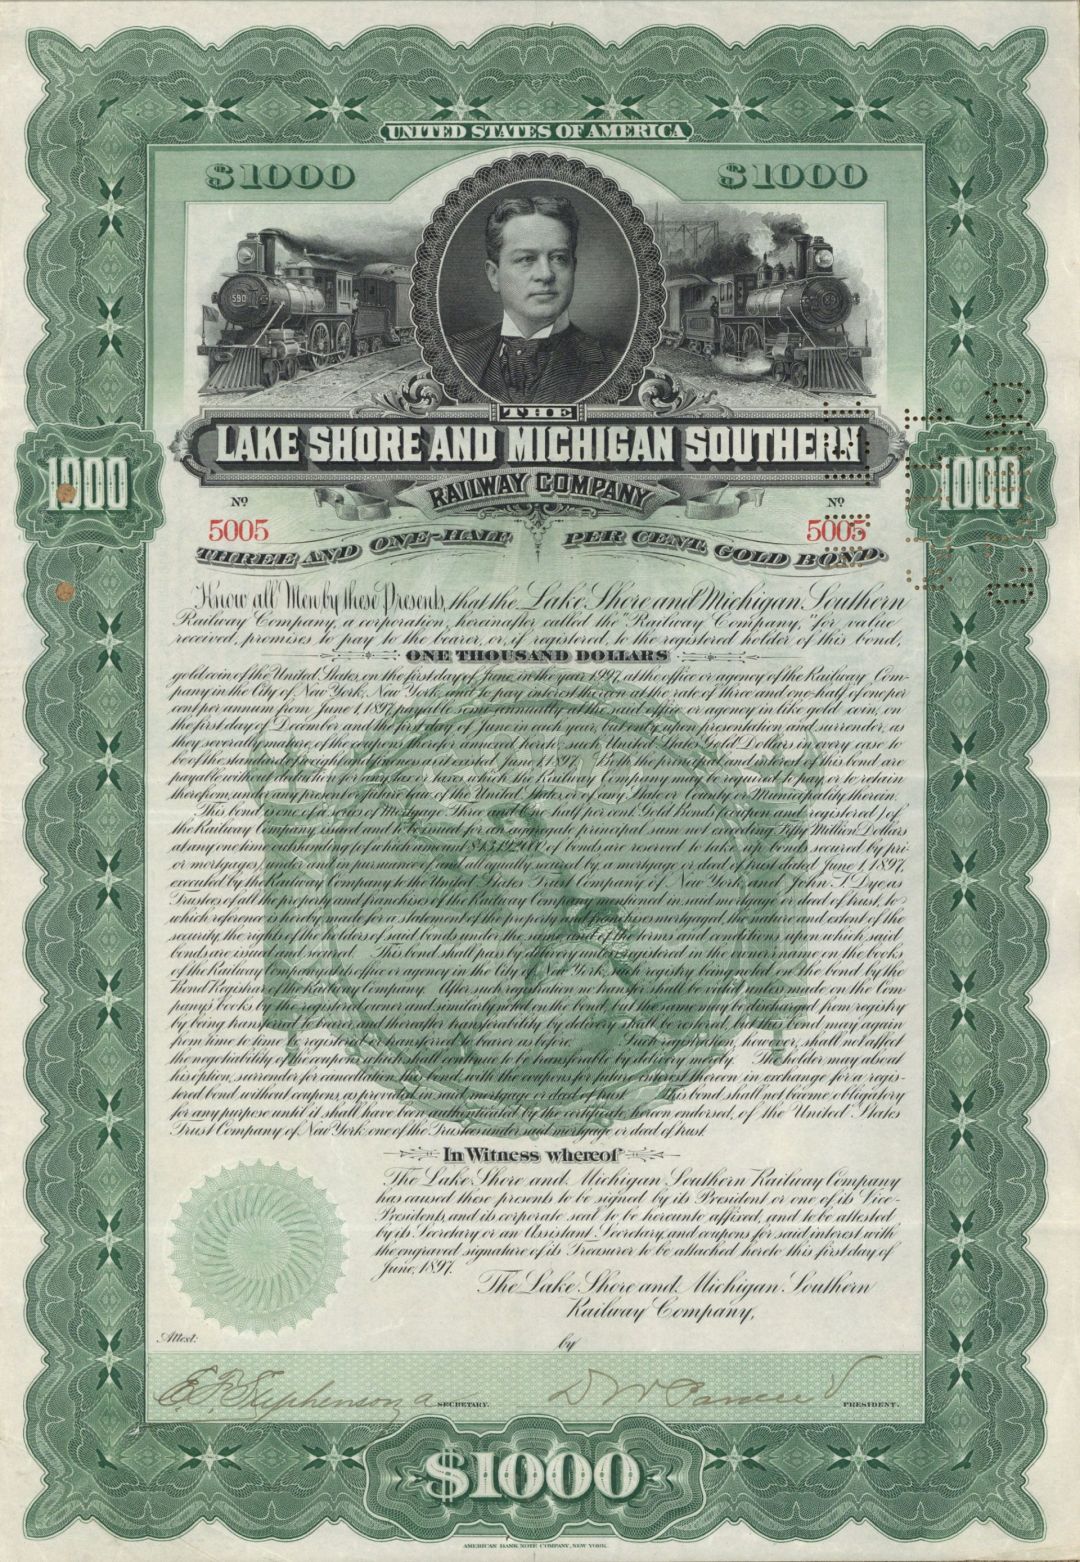 Lake Shore and Michigan Southern Railway -$1,000 Bond